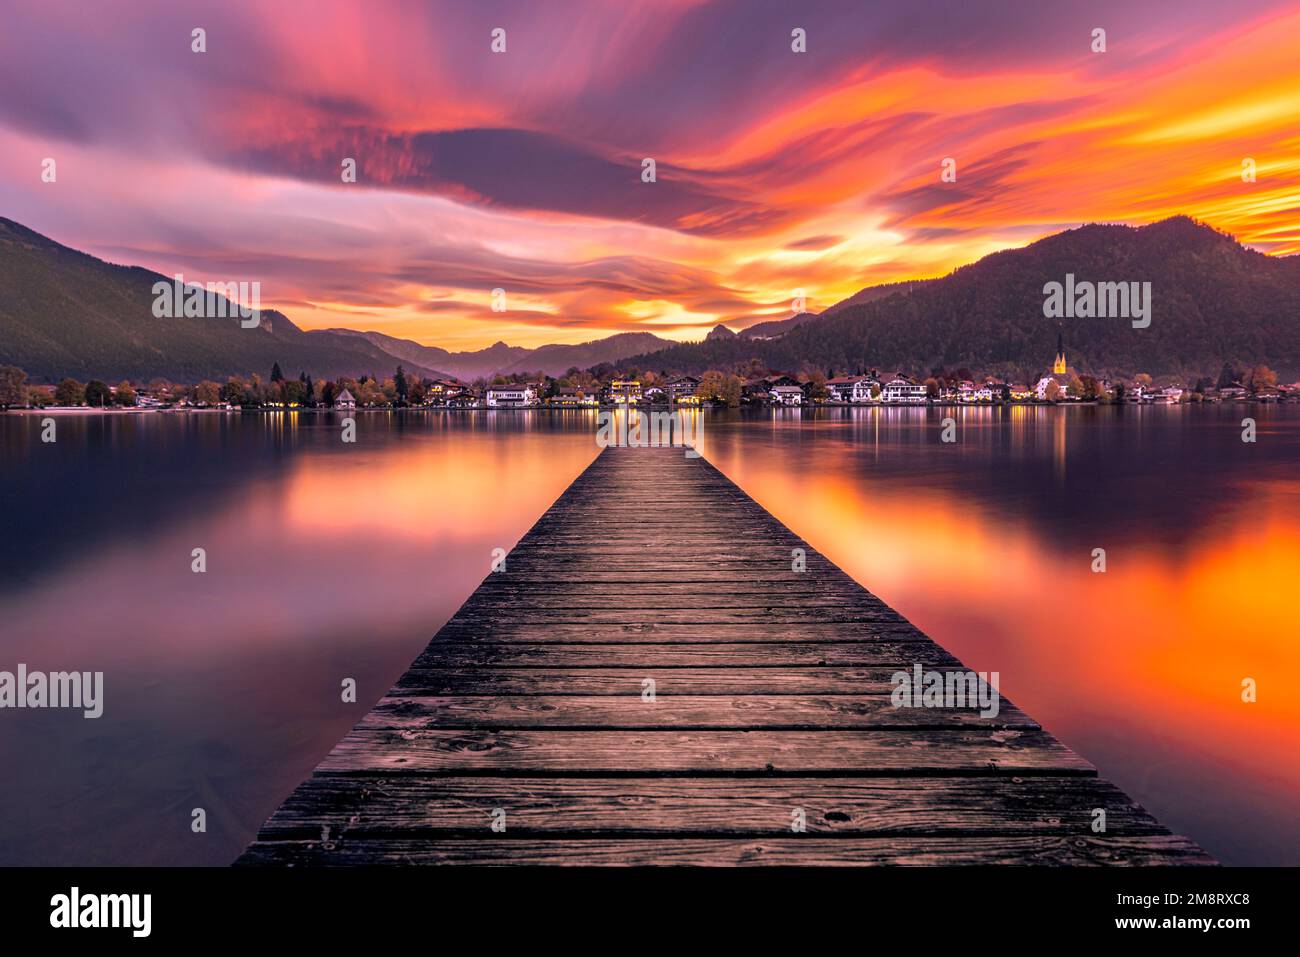 Sonnenuntergang am Tegernsee - Sonnenuntergang am Tegernsee, lange  Exposition, mystisch, Himmel, Wolken Stockfotografie - Alamy